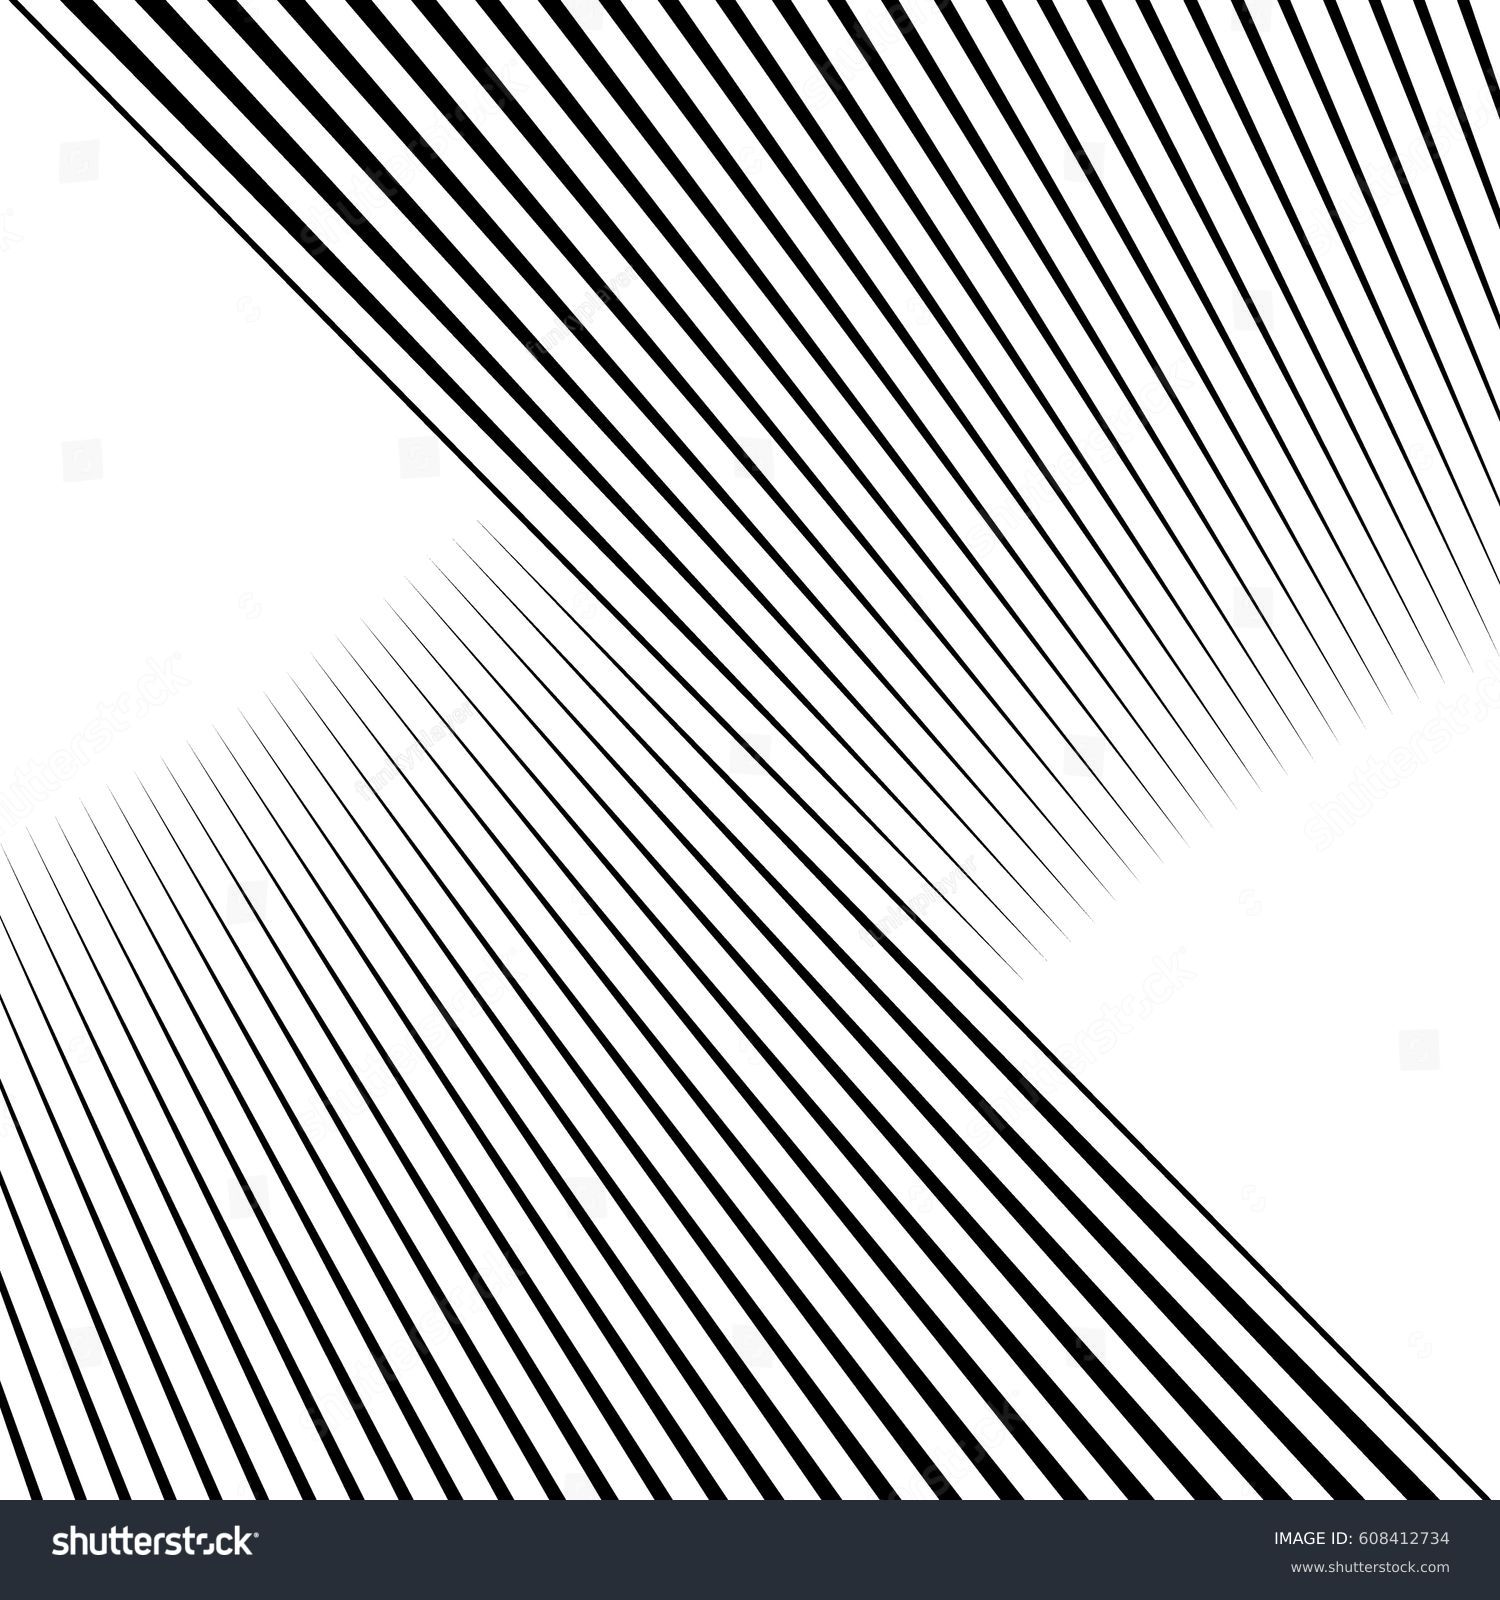 Diagonal Striped Illustration Repeated Black Lines เวกเตอร์สต็อก (ปลอด